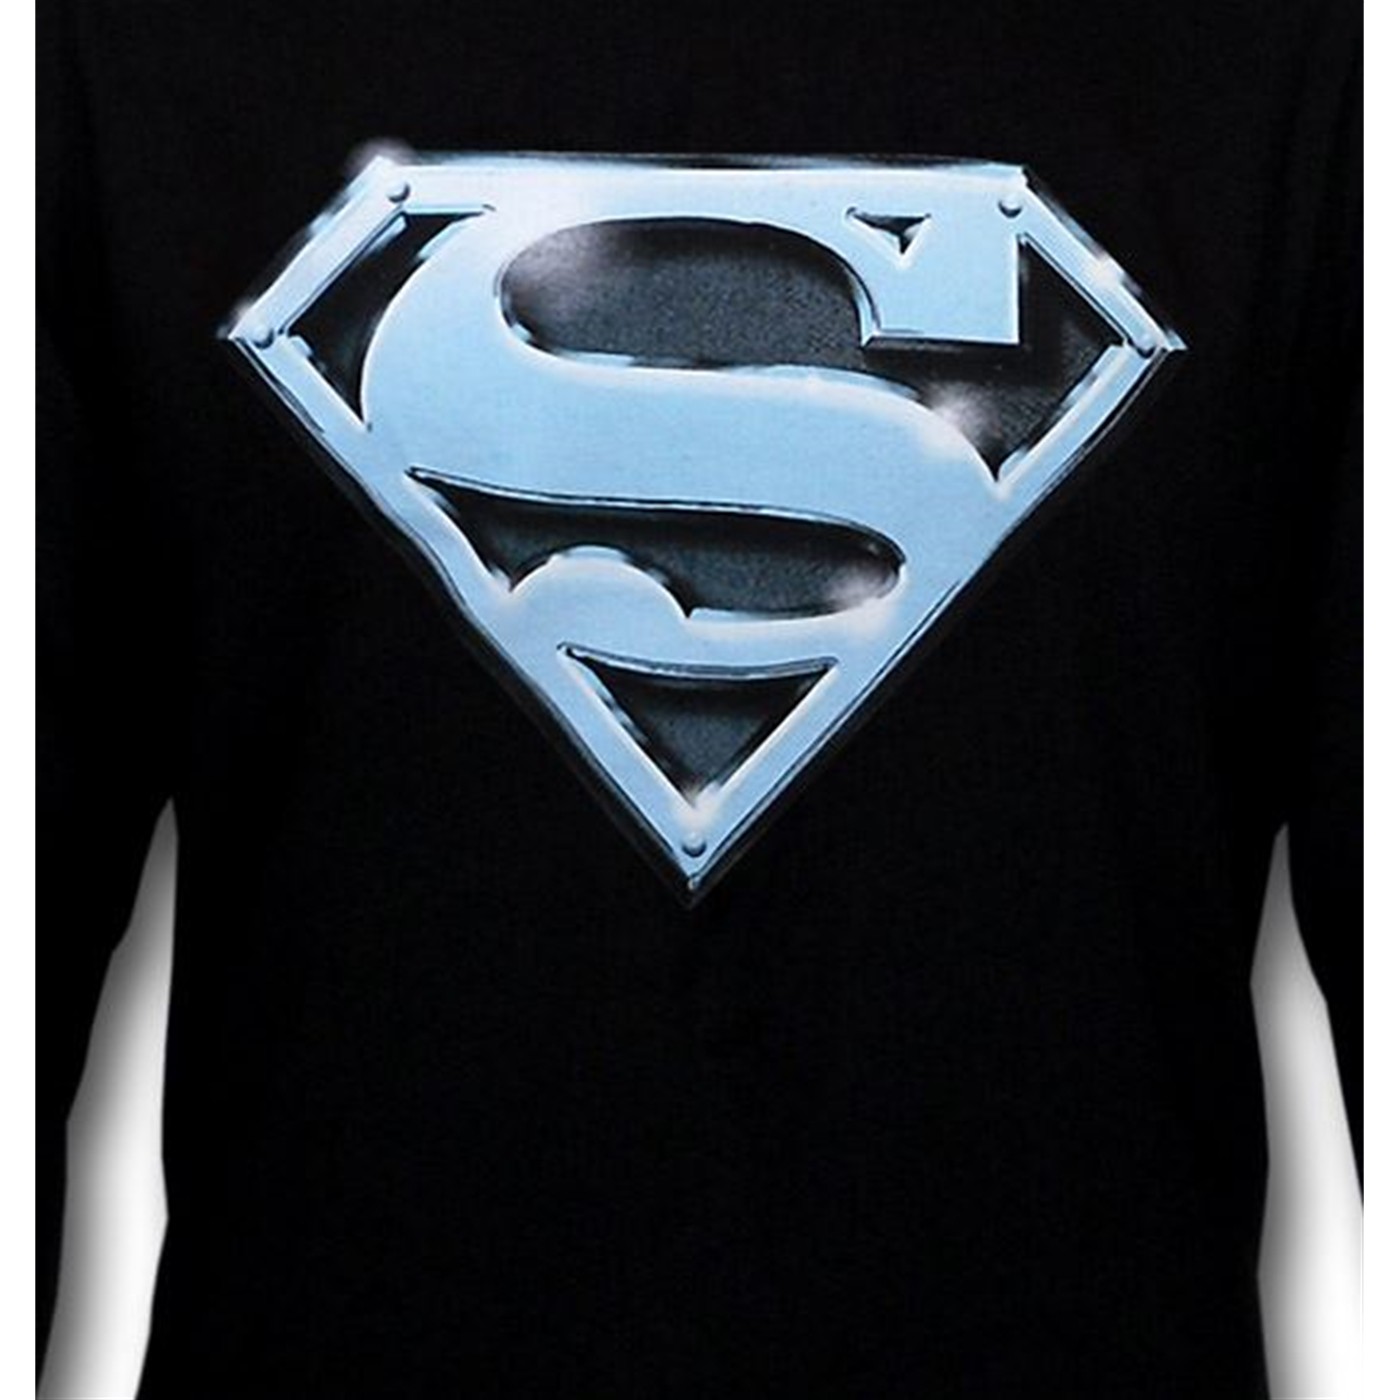 Superman Blue Steel Symbol Black Long Sleeve T-Shirt